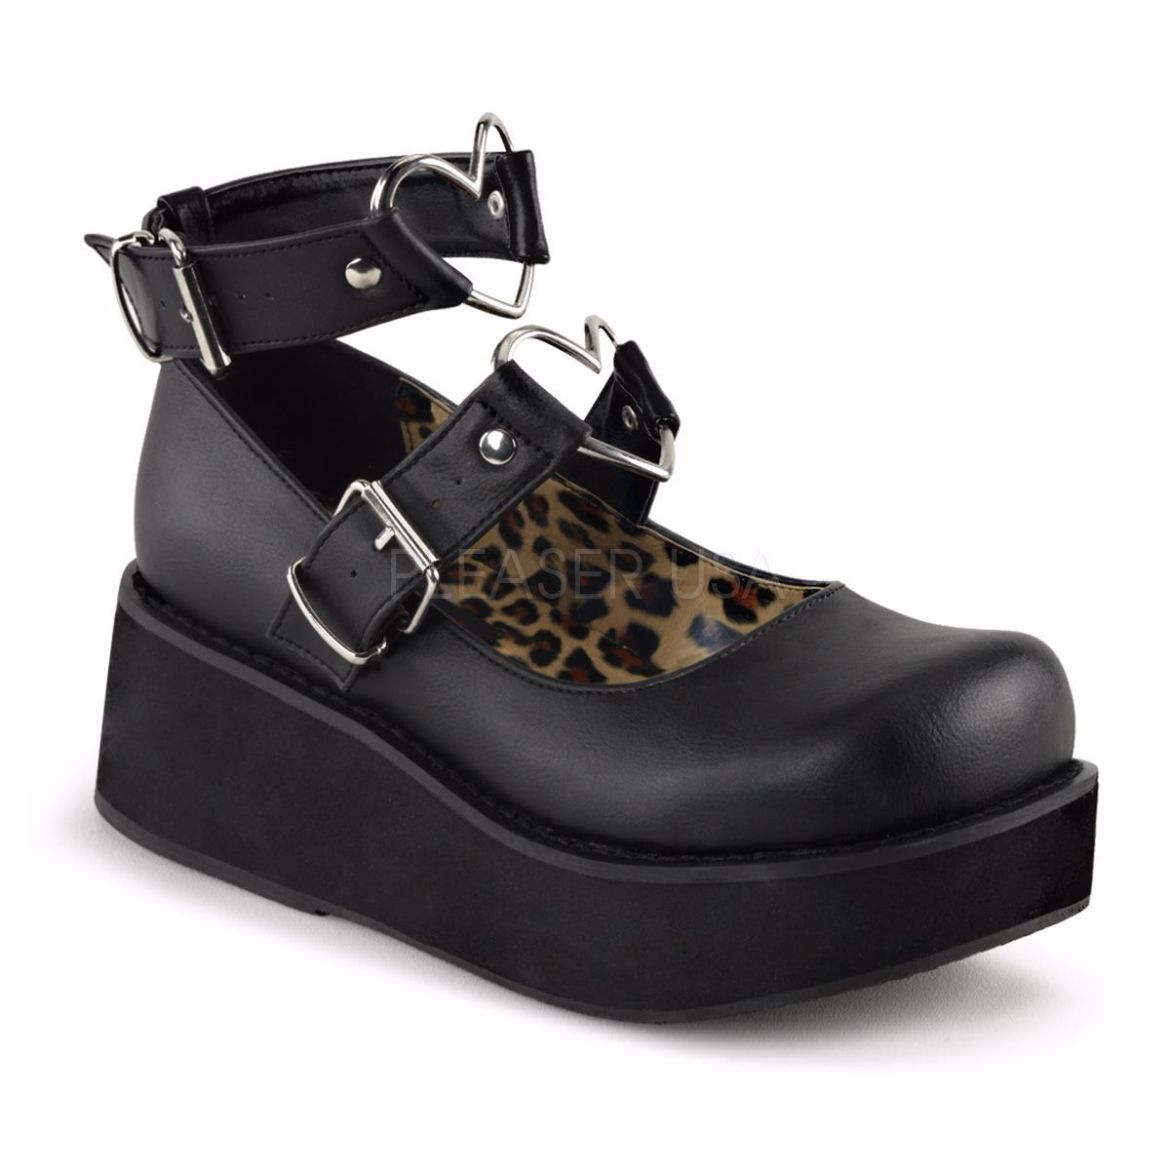 Product image of Demonia Sprite-02 Black Vegan Leather, 2 1/4 inch Platform Court Pump Shoes